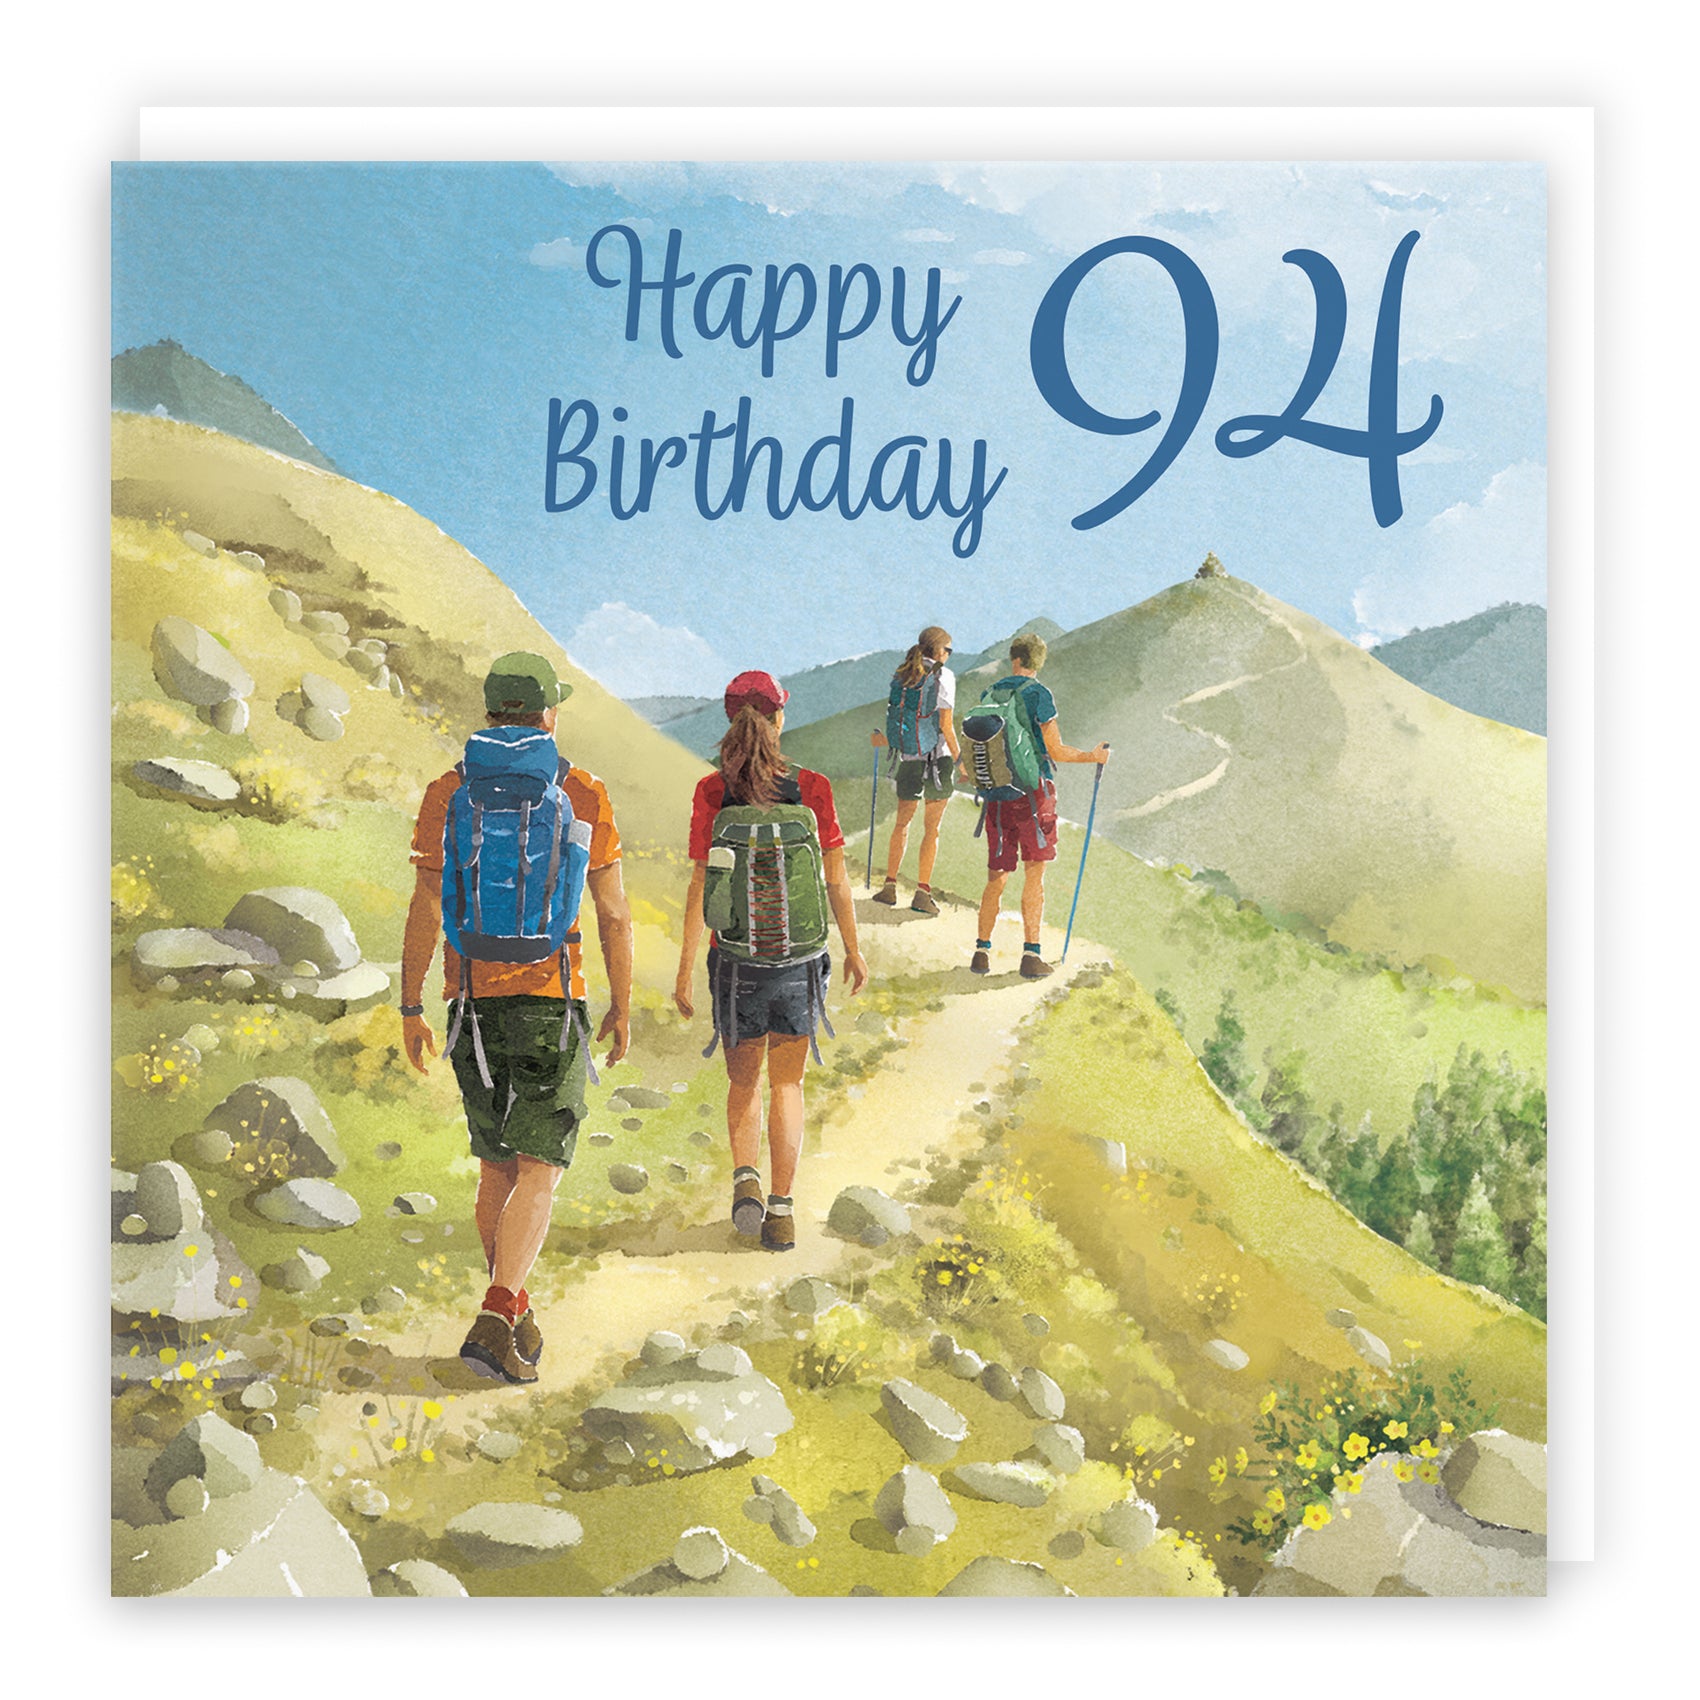 94th Birthday Cards - Age 94